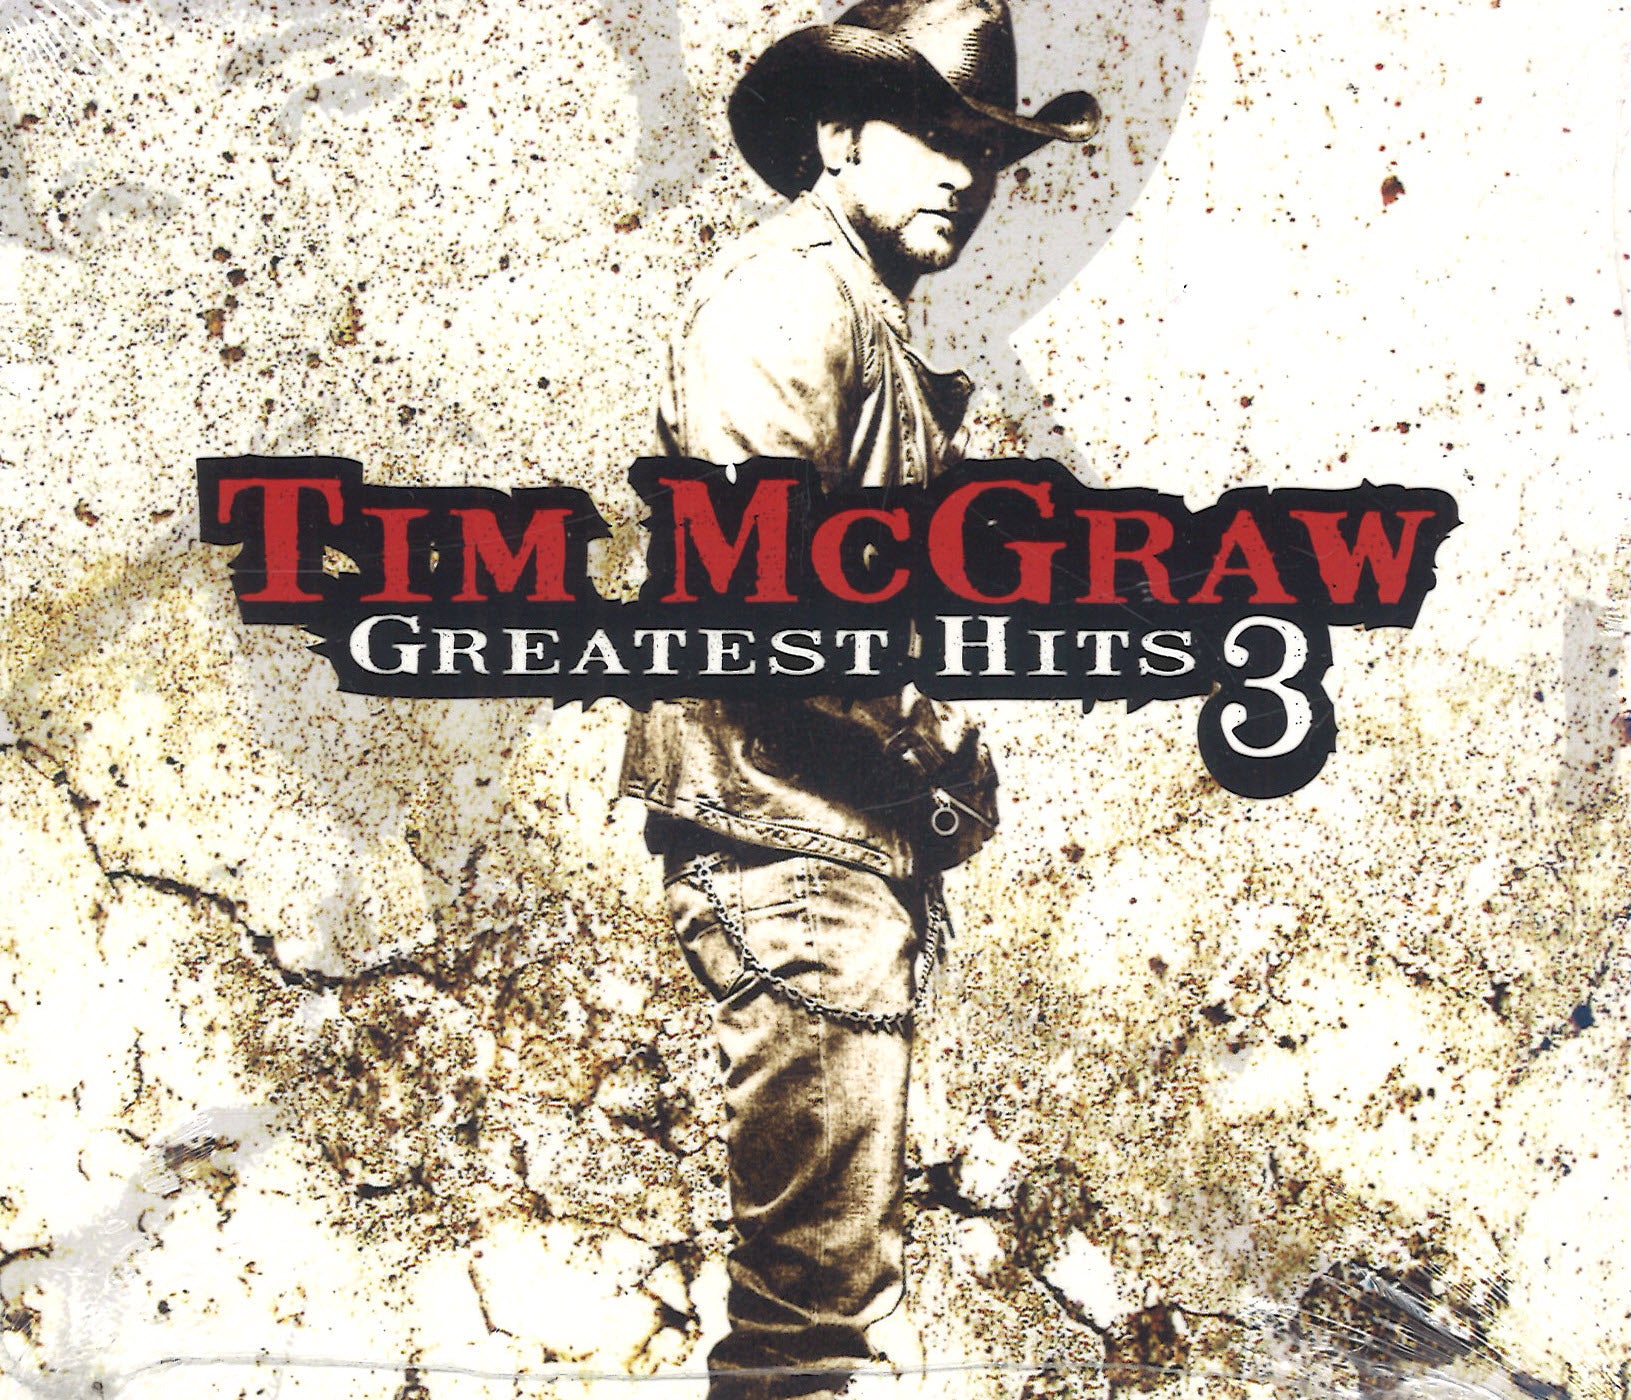 Tim Mcgraw Greatest Hits 3